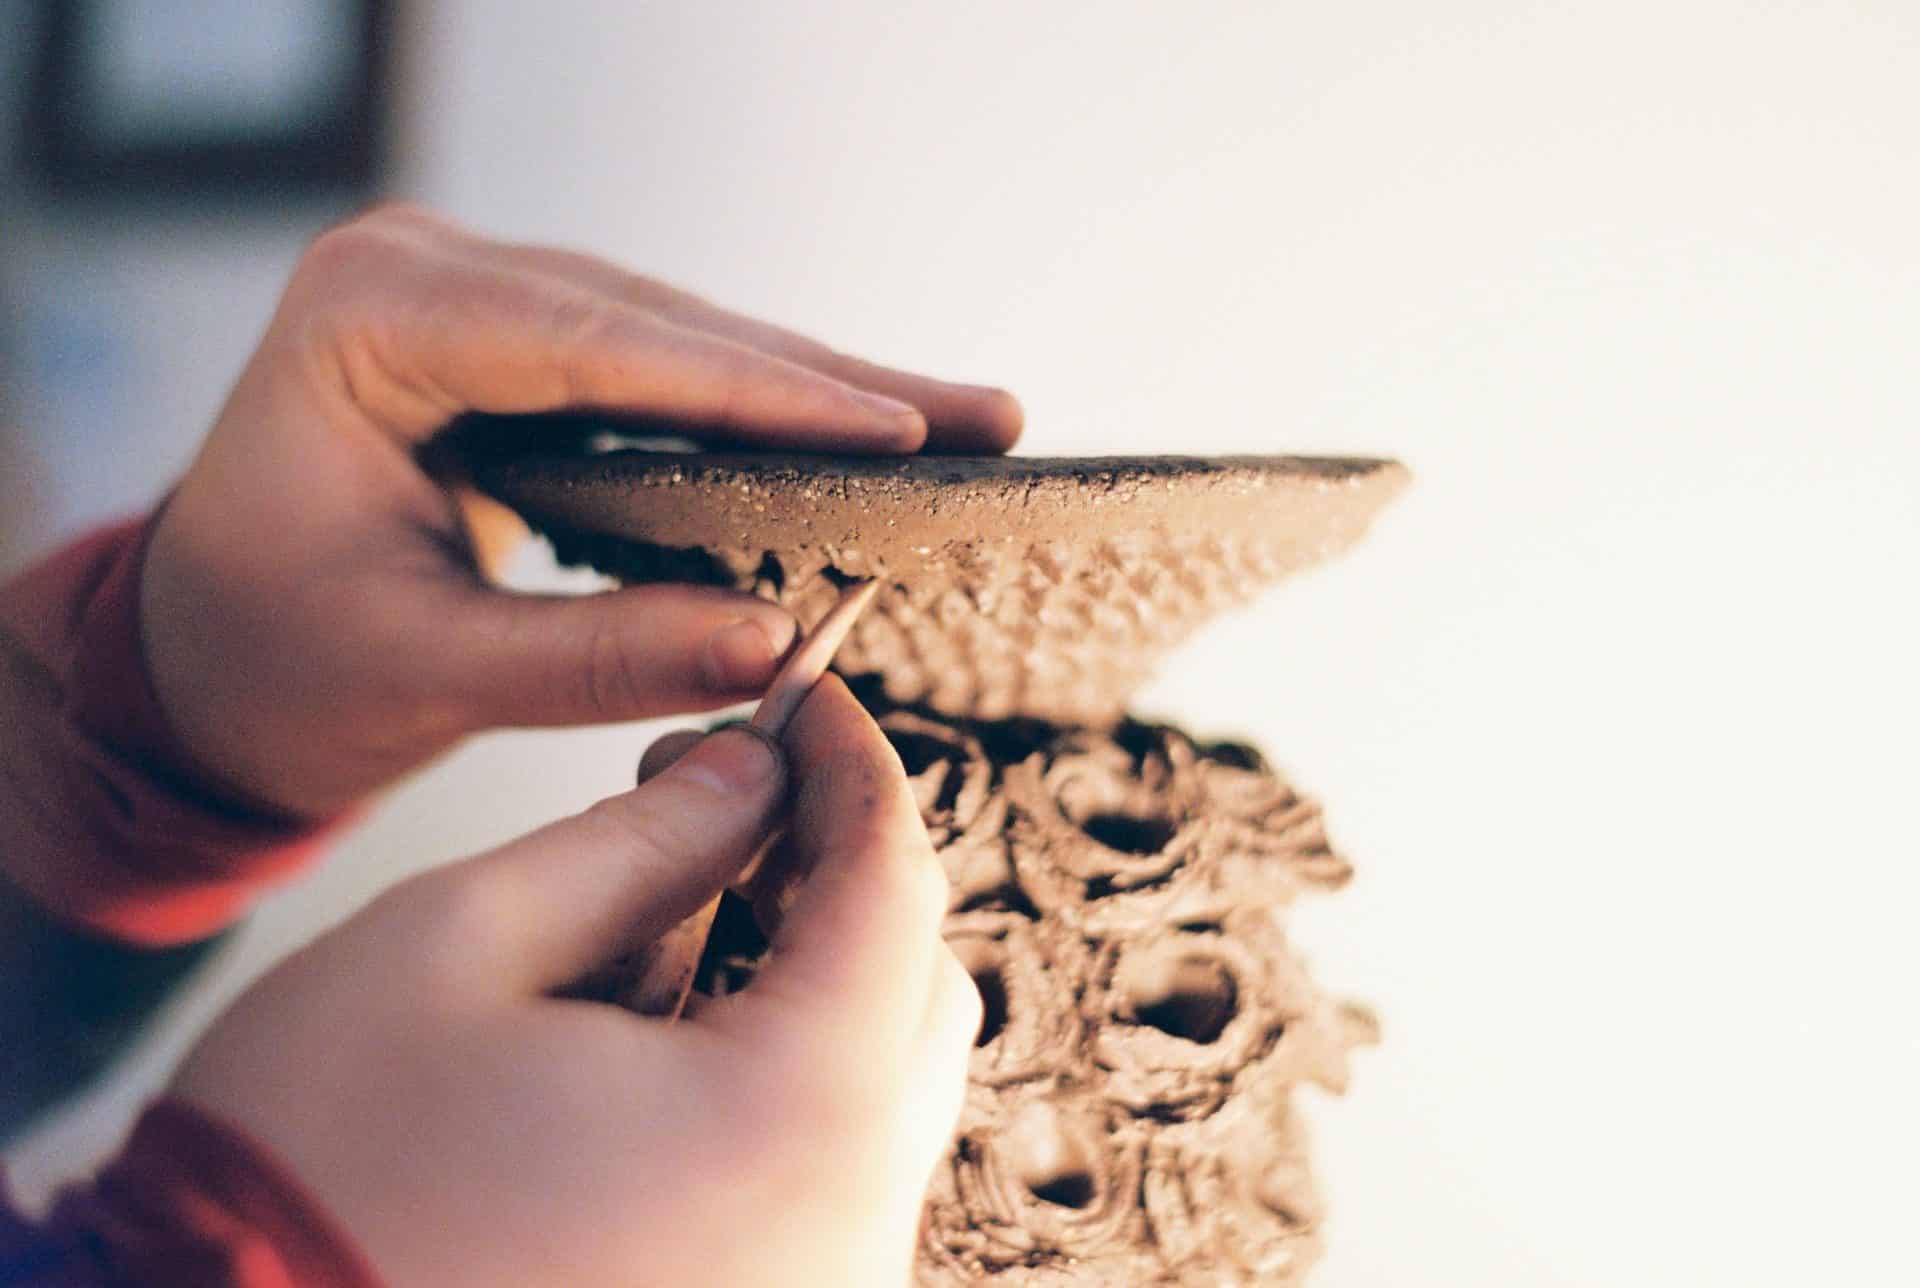 Ceramics artist Karlene Jean Kantner shapes earthenware vessels by hand. Press photo courtesy of the artist